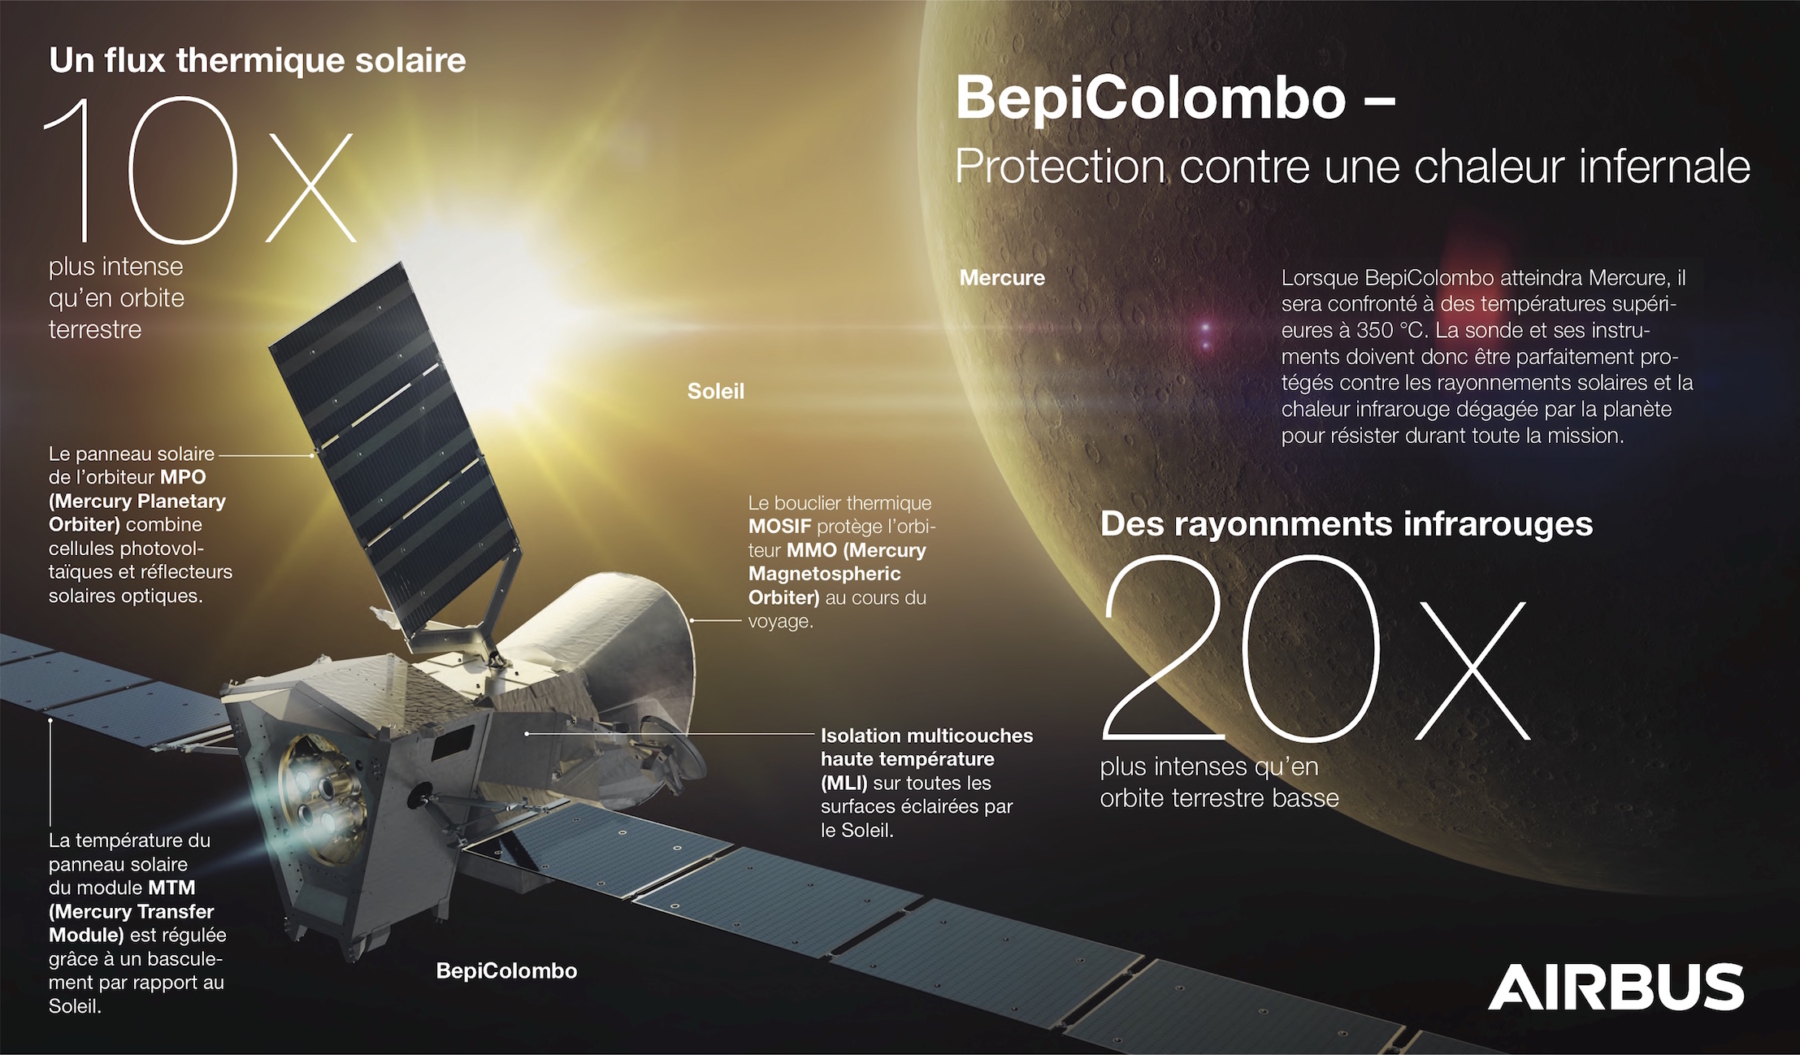 Protection thermique de BepiColombo © Airbus